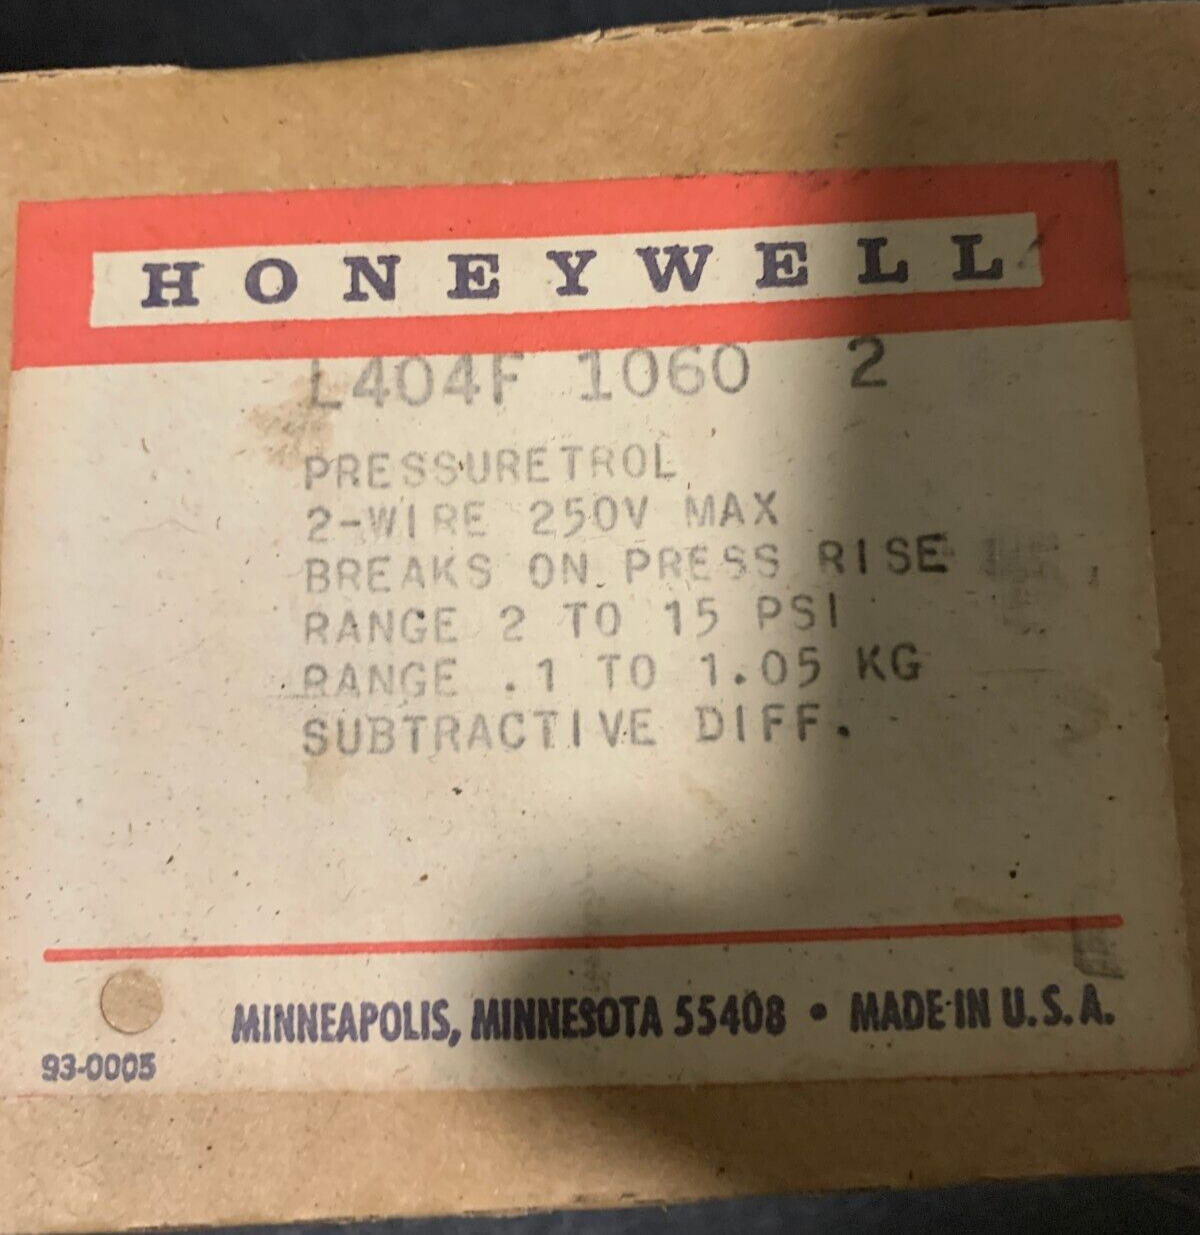 Honeywell L404F 1060 Pressuretrol Controller  New Old Stock